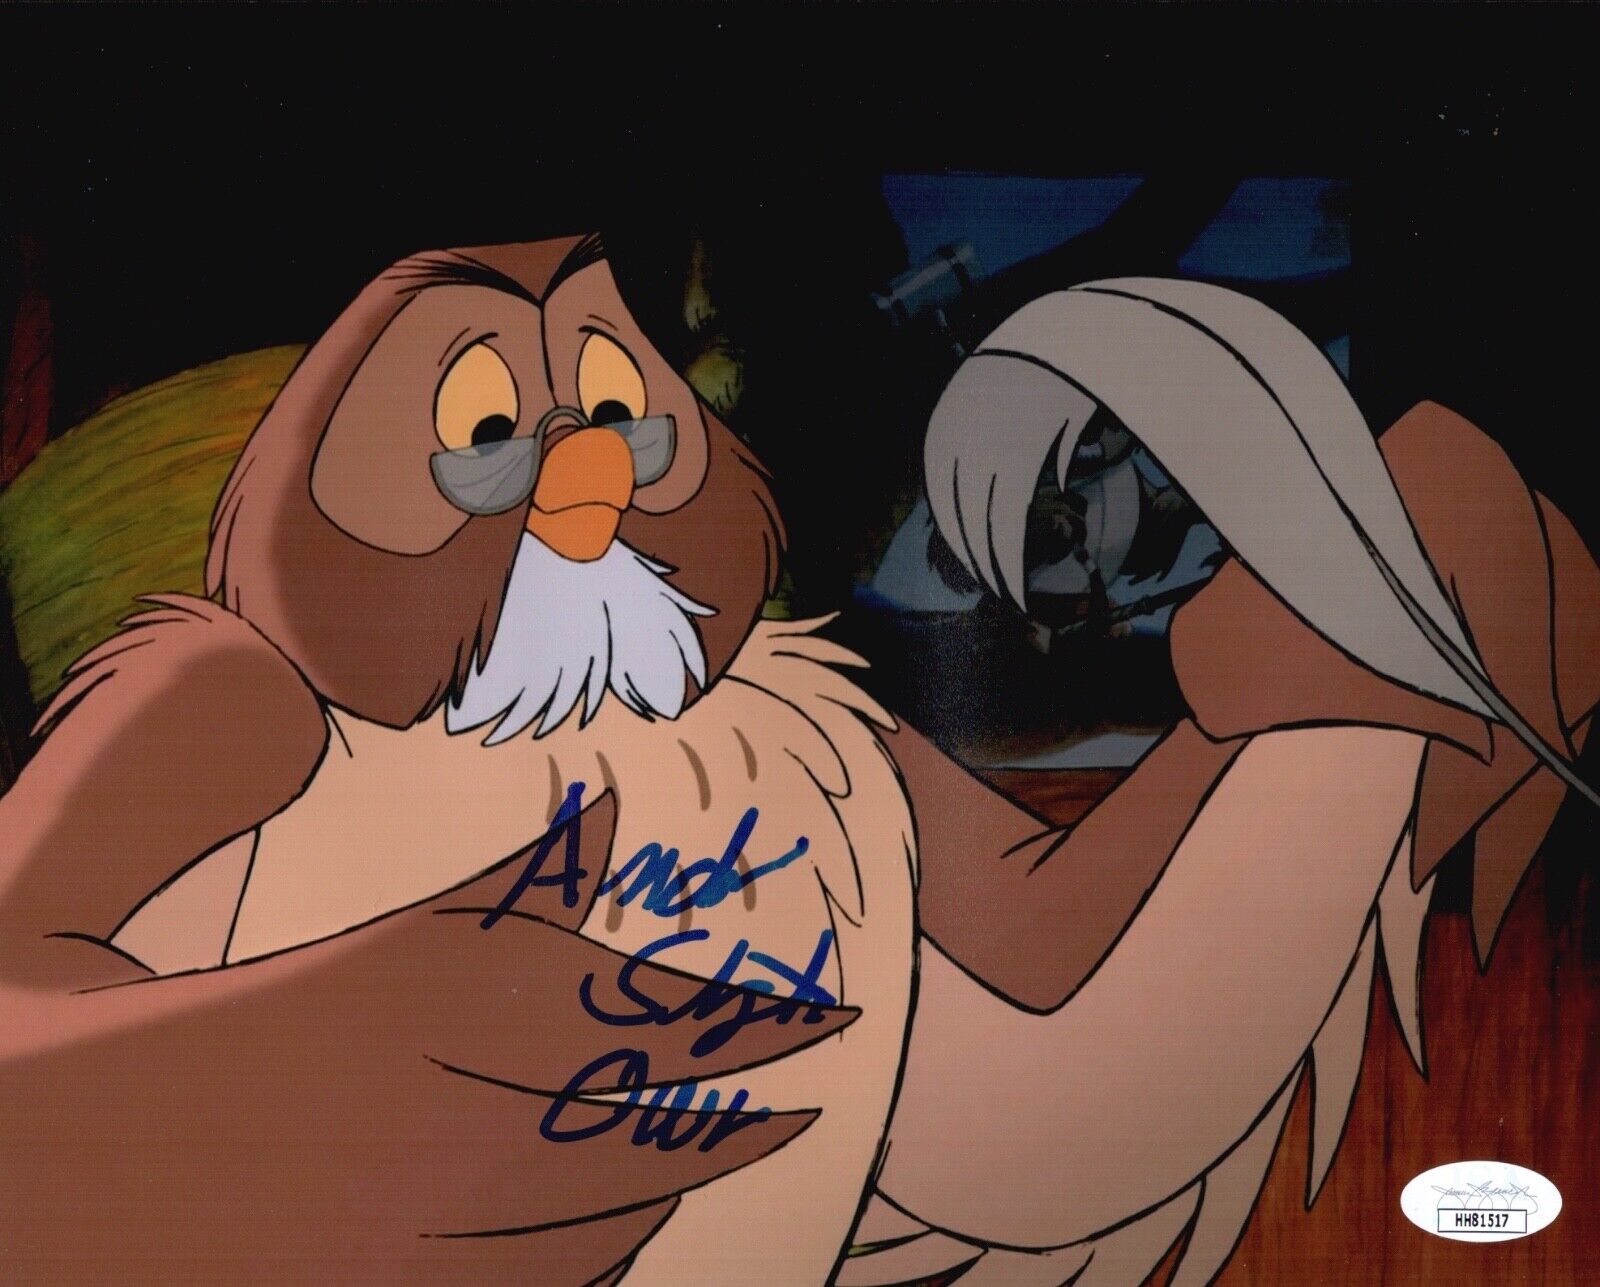 ANDRE STOJKA Signed 8x10 Photo Poster painting OWL Winnie the Pooh Disney Autograph JSA COA Cert